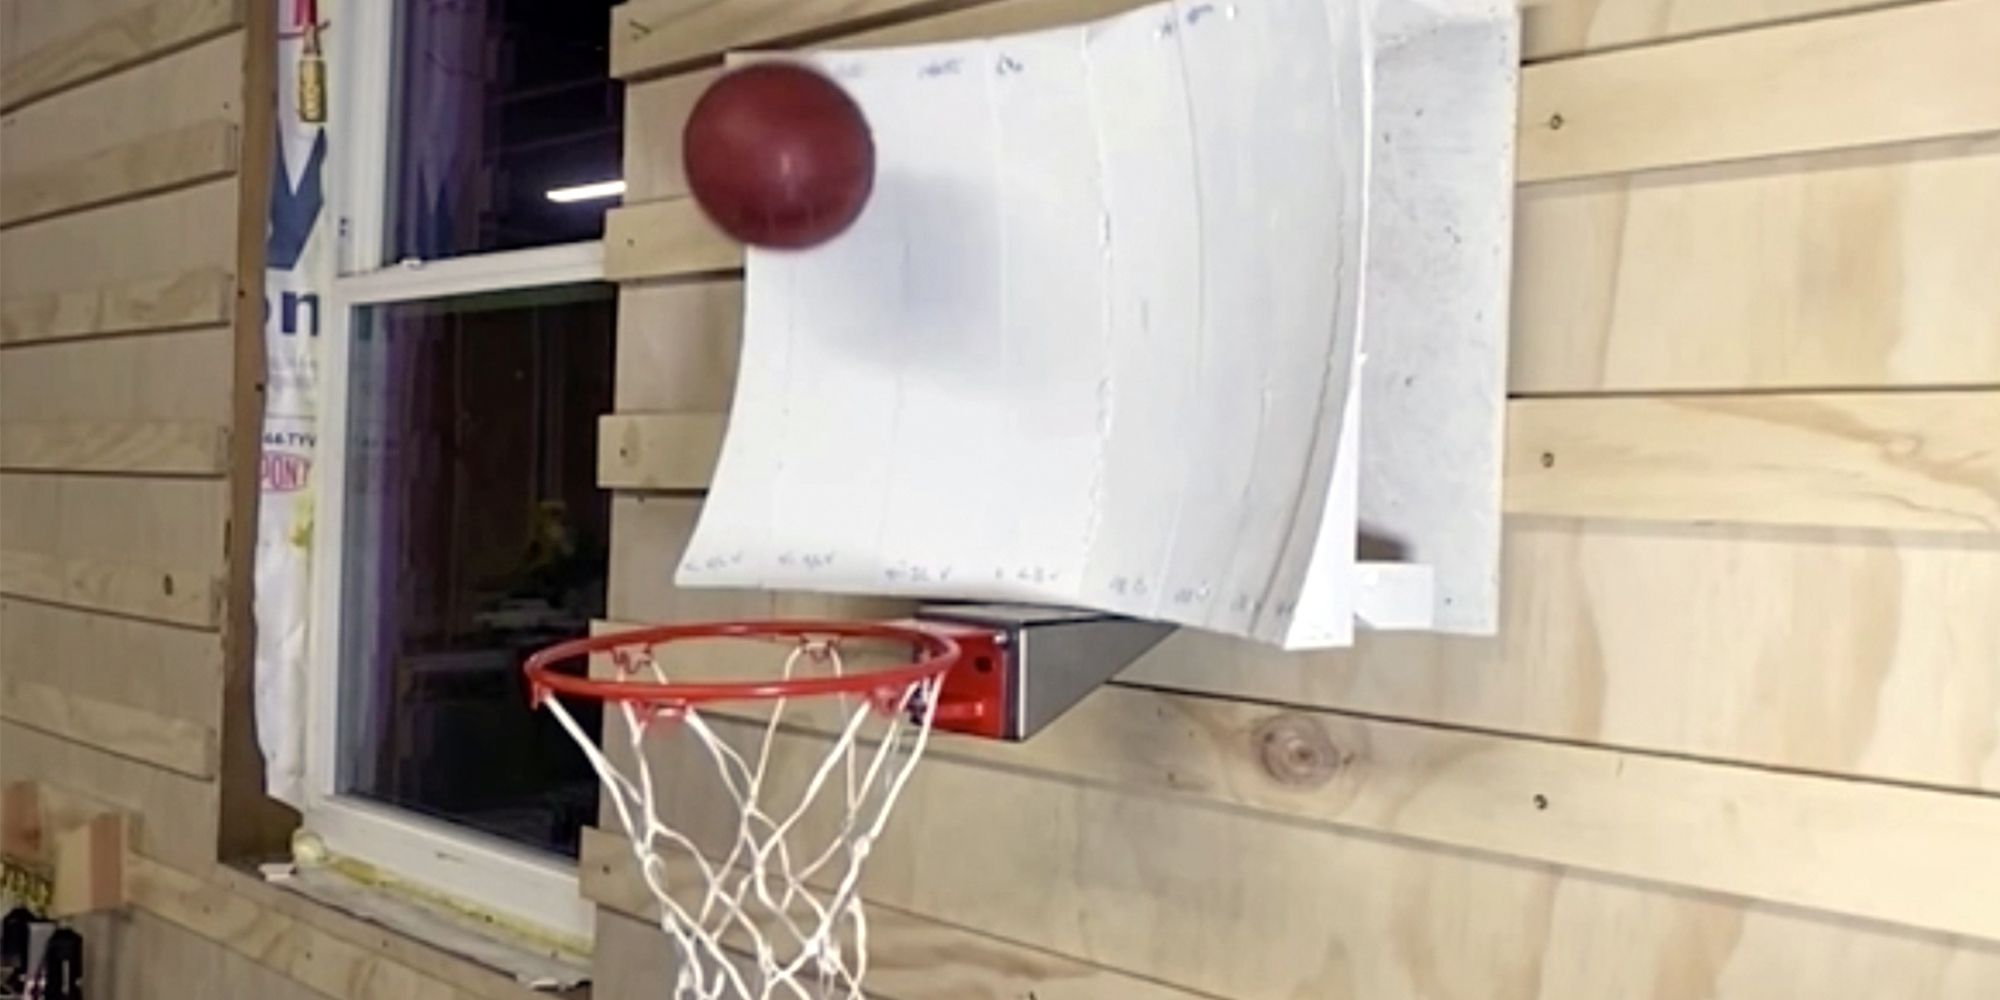 Never-Miss Basketball | DIY Basketball Hoop